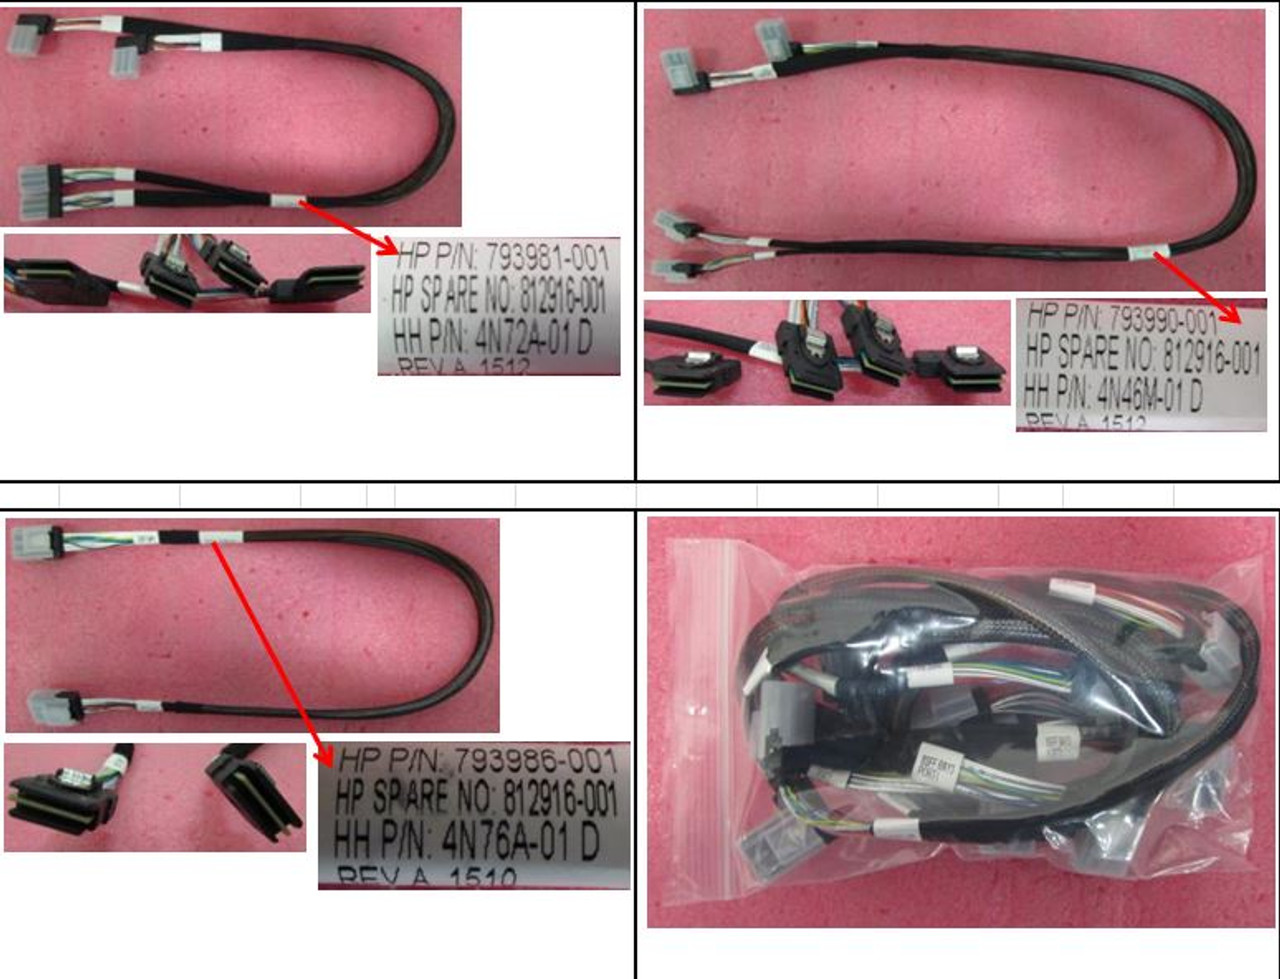 SPS-Cable Kit: mSAS-HD BP (B1/B3) - 812916-001